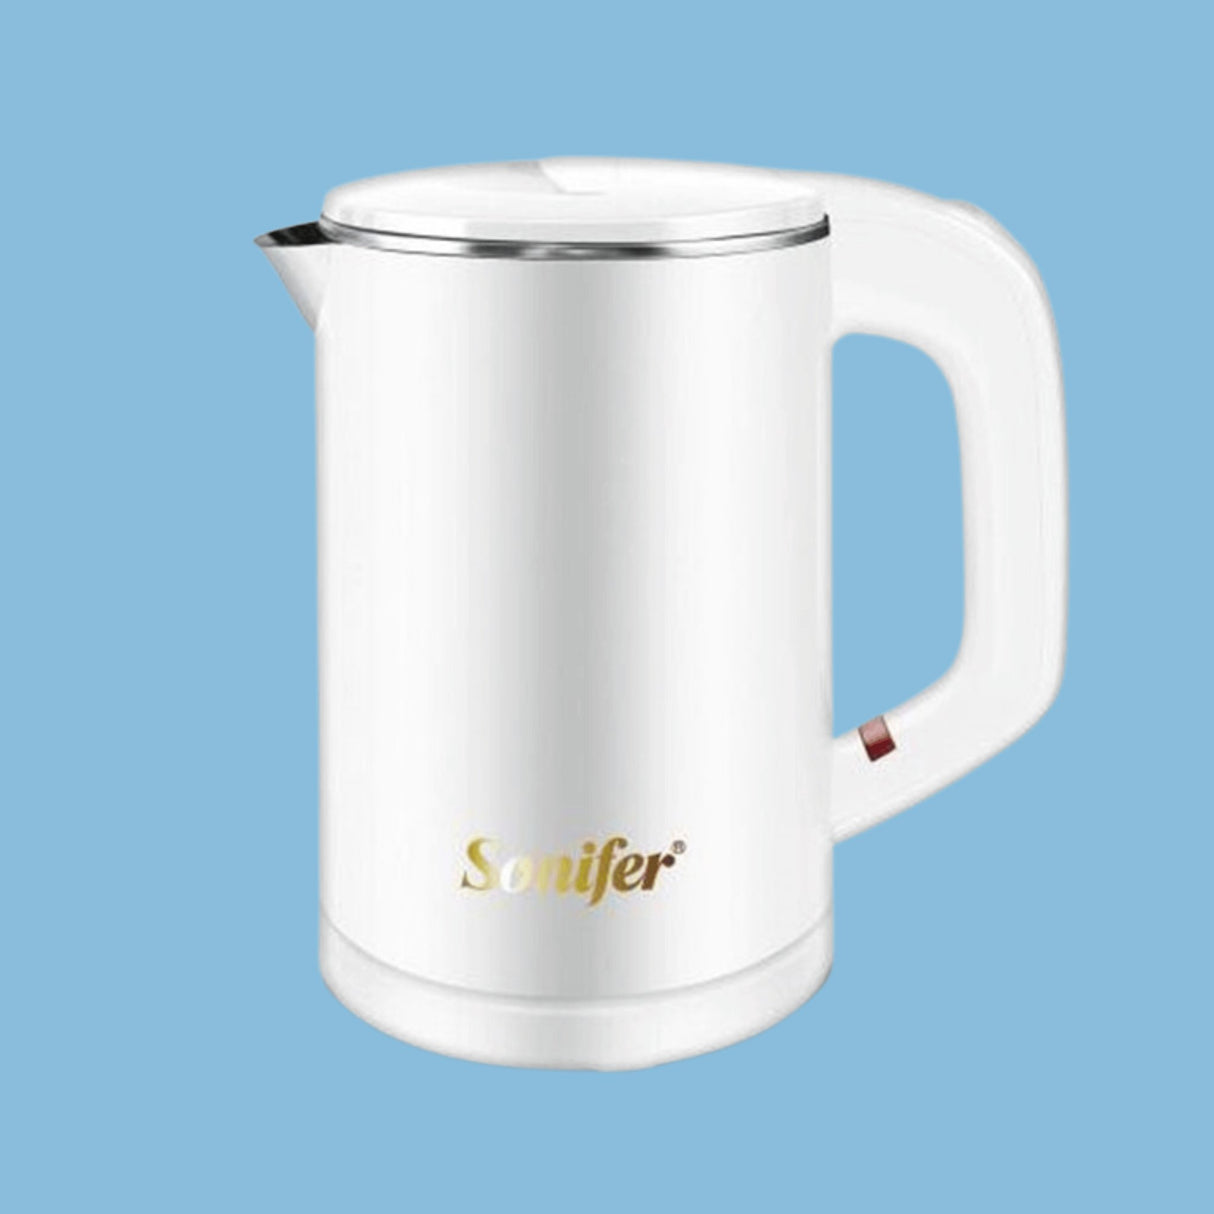 Sonifer 0.6L Portable Travel Electric Kettle Mug, White - KWT Tech Mart